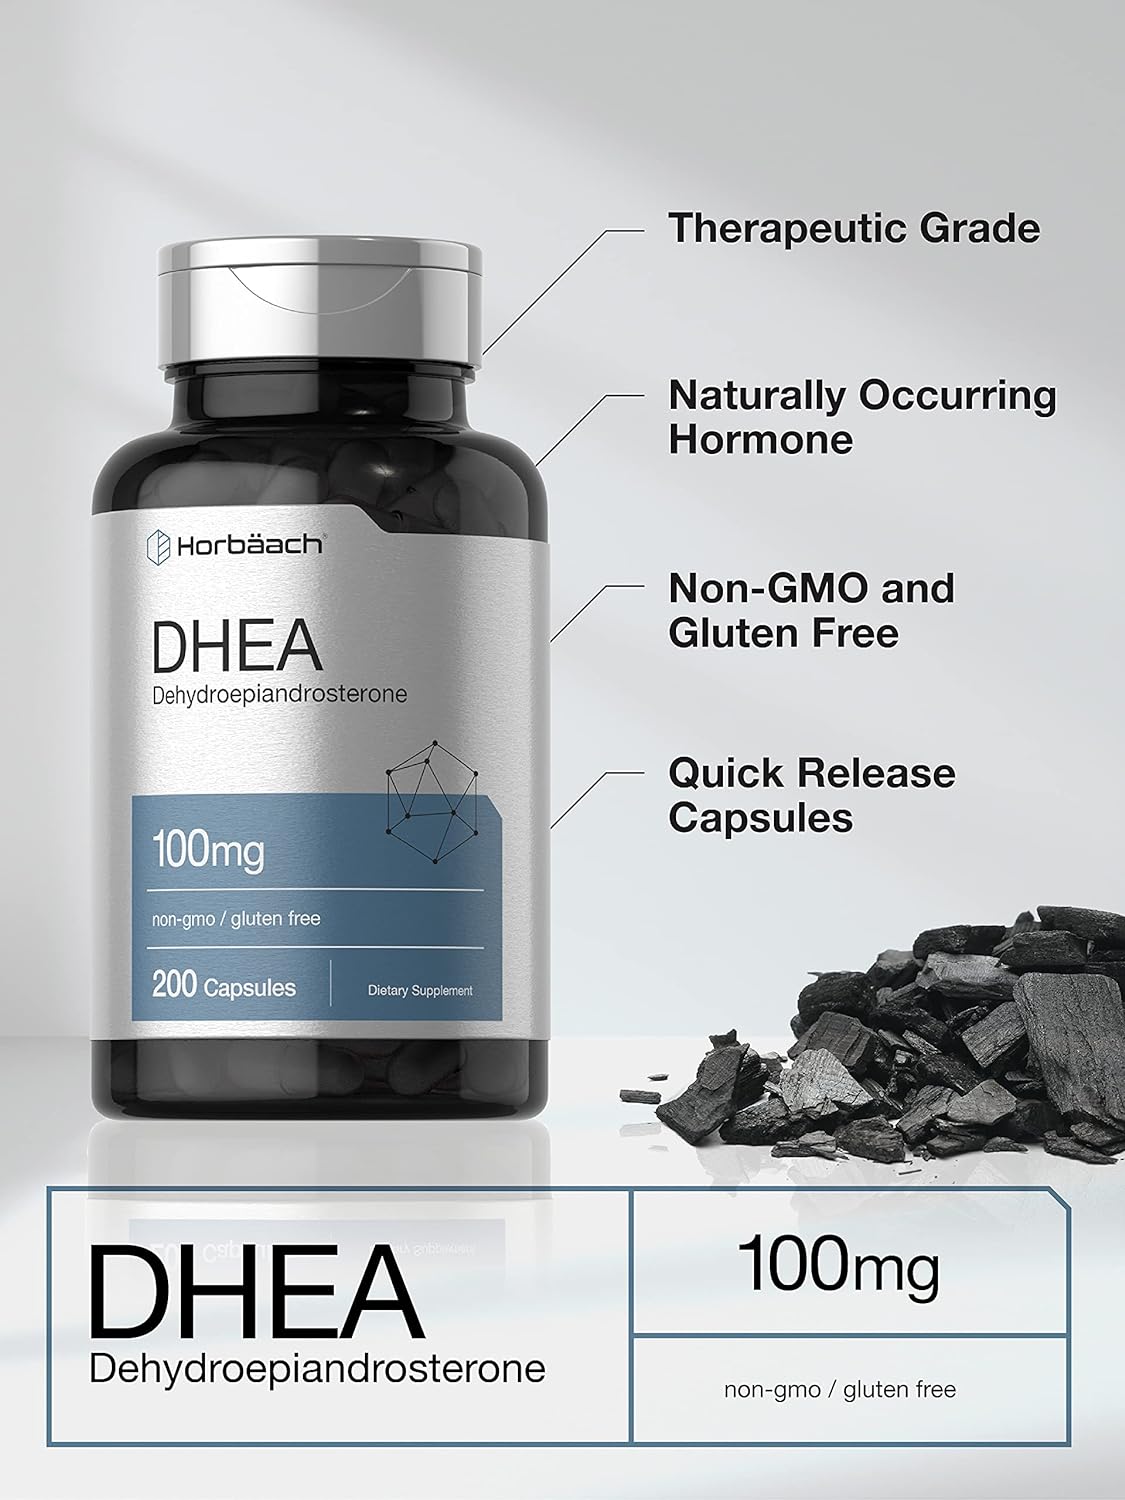 DHEA benefits